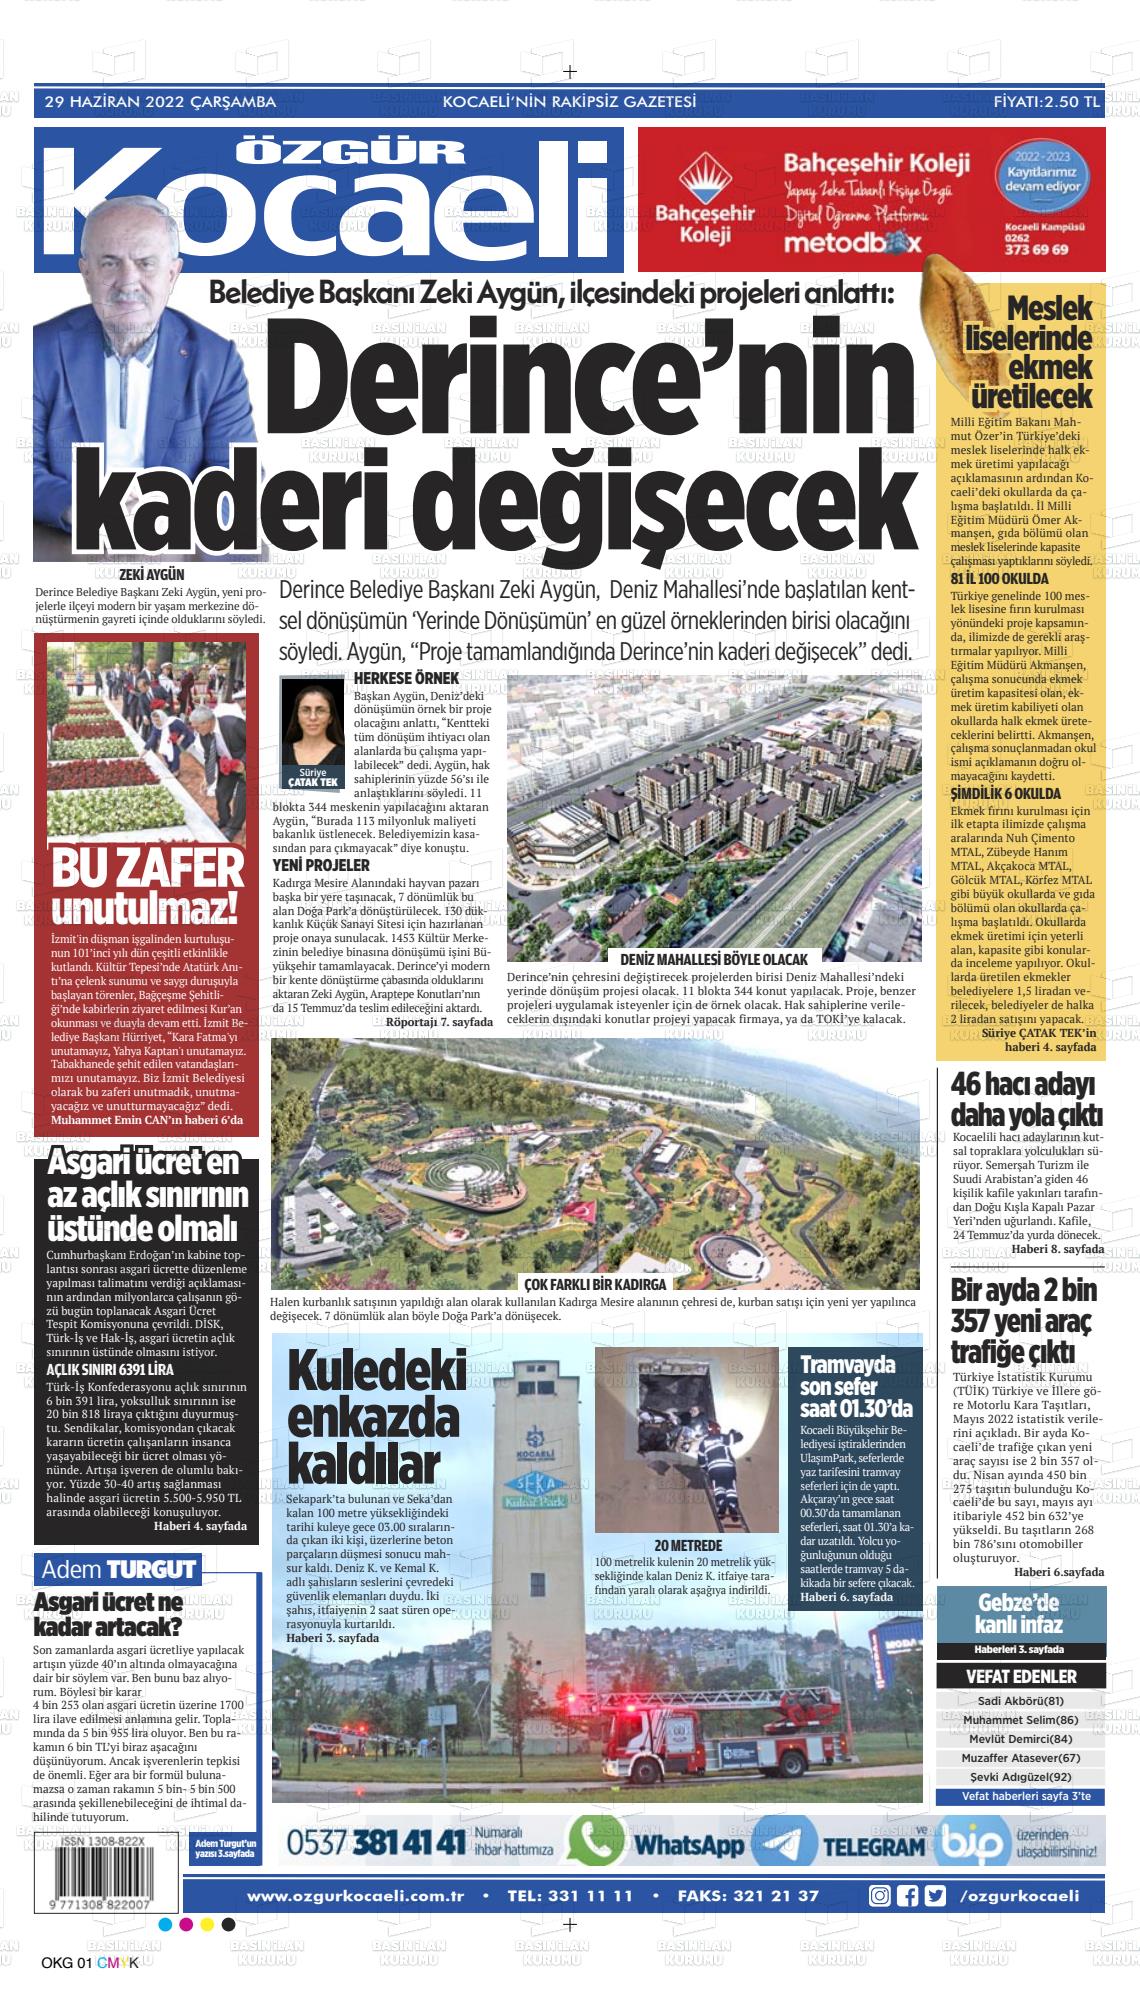 29 Haziran 2022 Özgür Kocaeli Gazete Manşeti